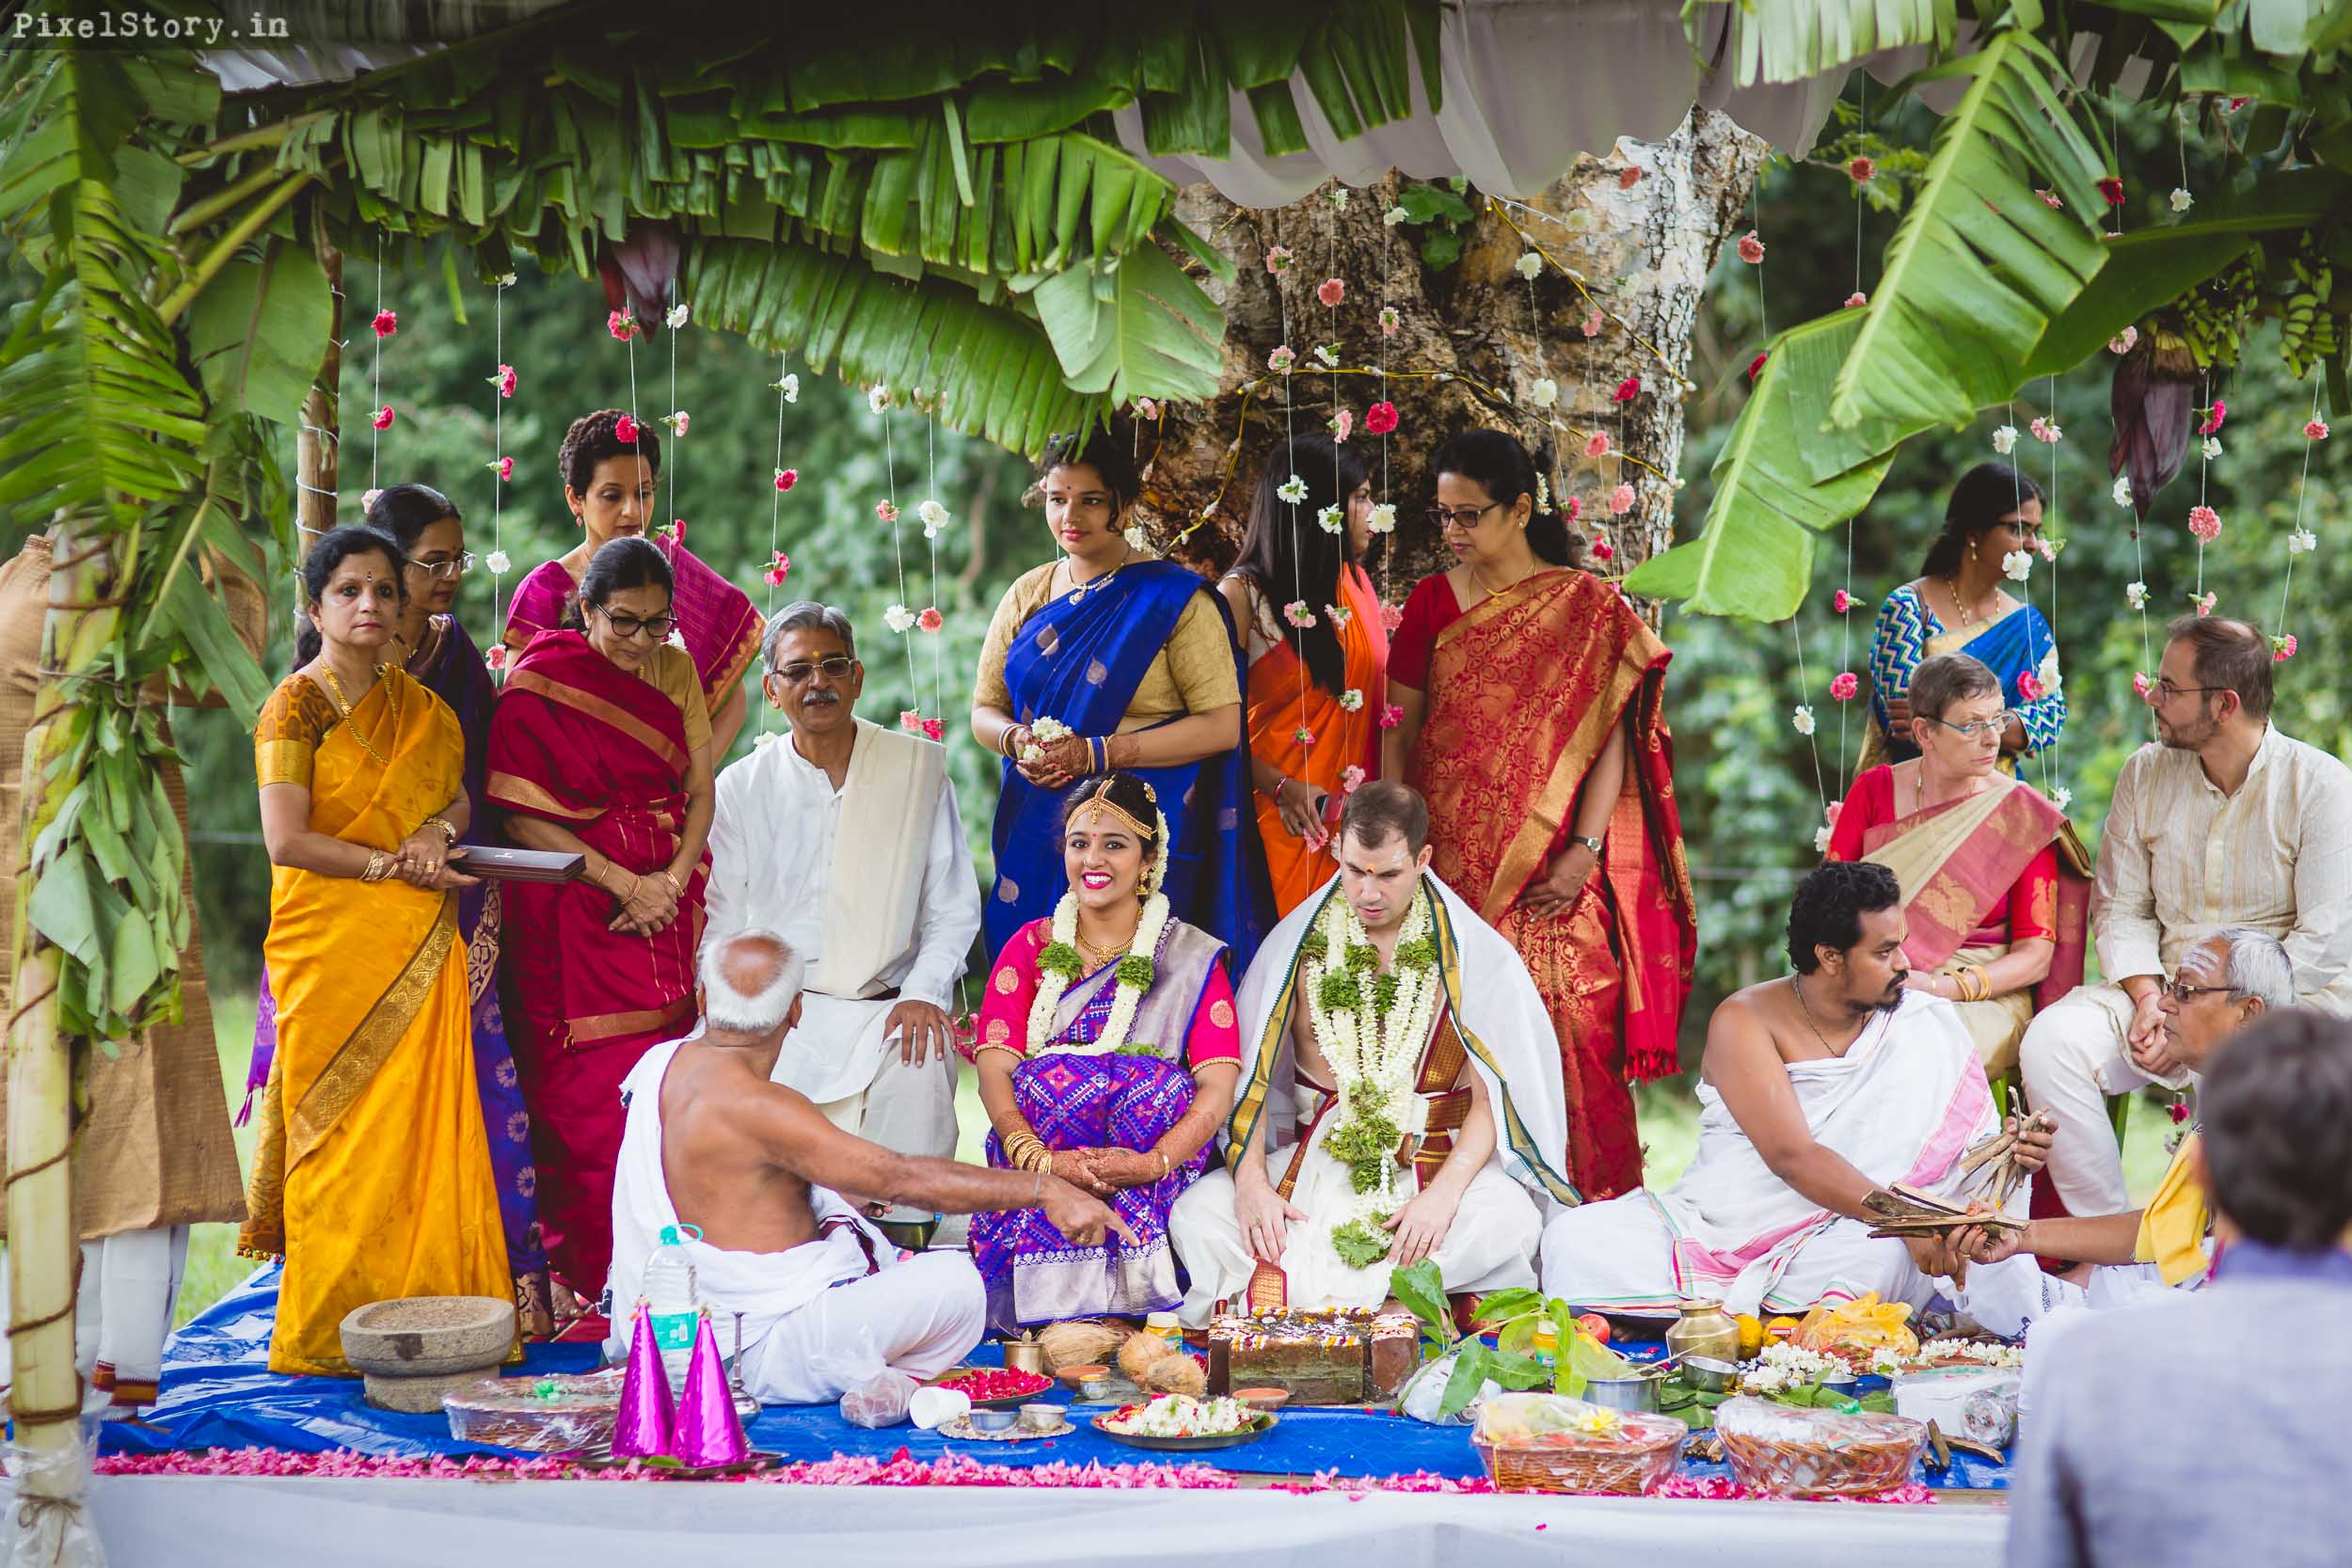 PixelStory-Jungle-Wedding-Photographer-Masinagudi-Indo-French057.jpg